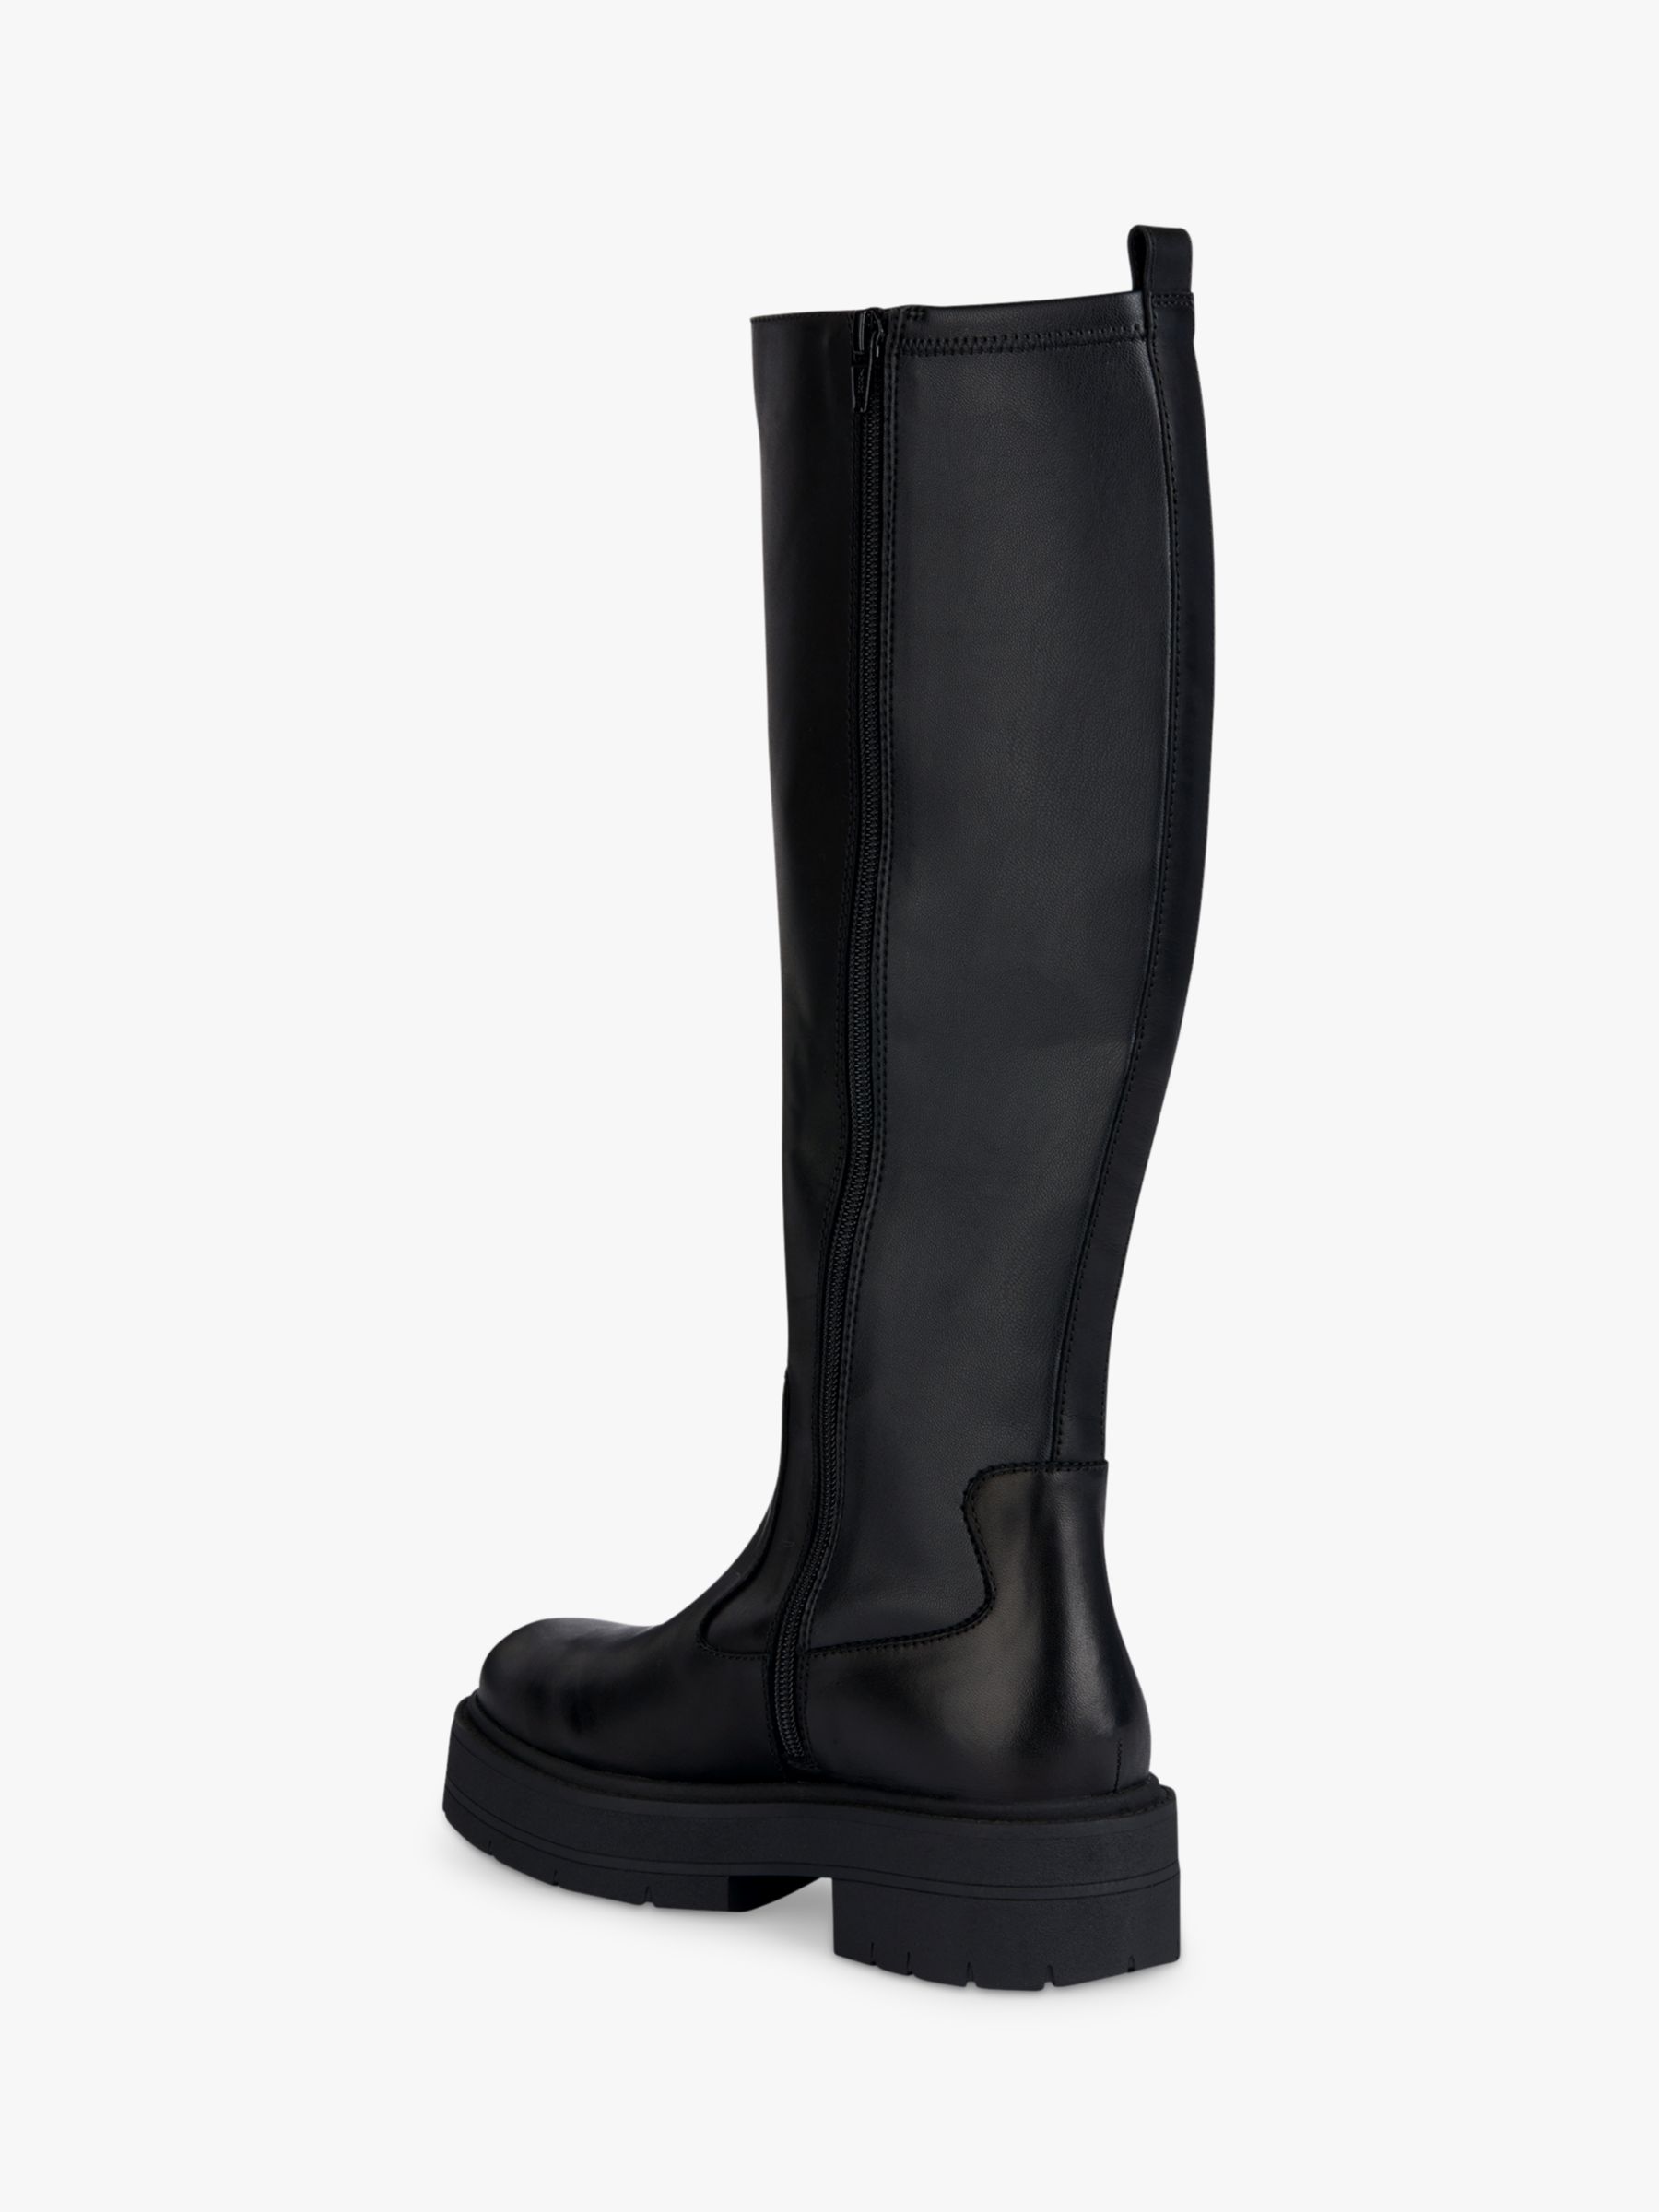 Geox Spherica EC7 Leather Blend Knee High Boots, Black